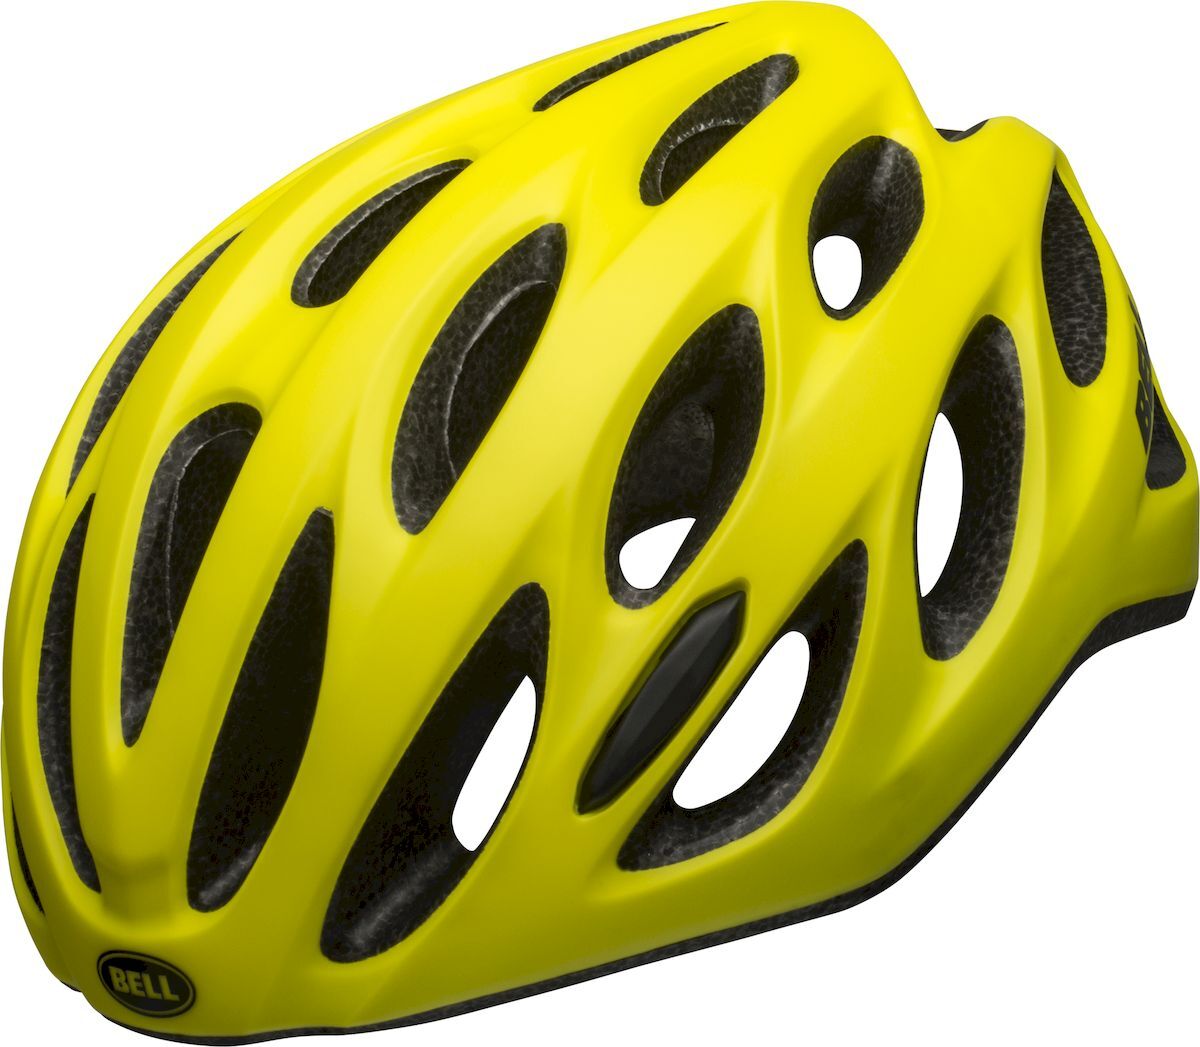 Bell Helmets Tracker R - Casco ciclismo carretera